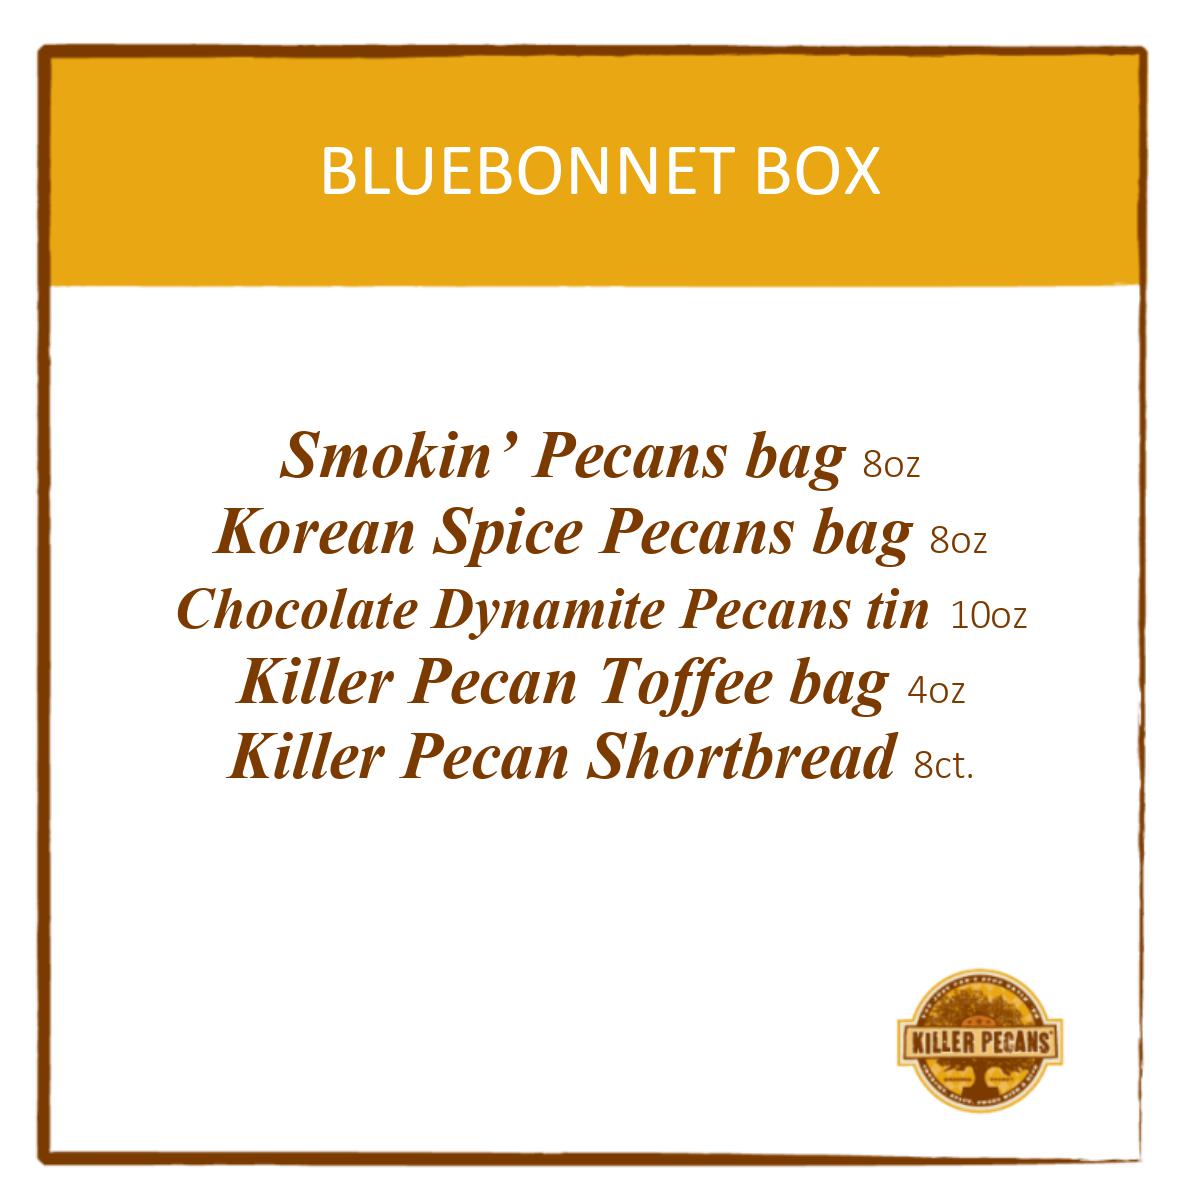 Bluebonnet Box